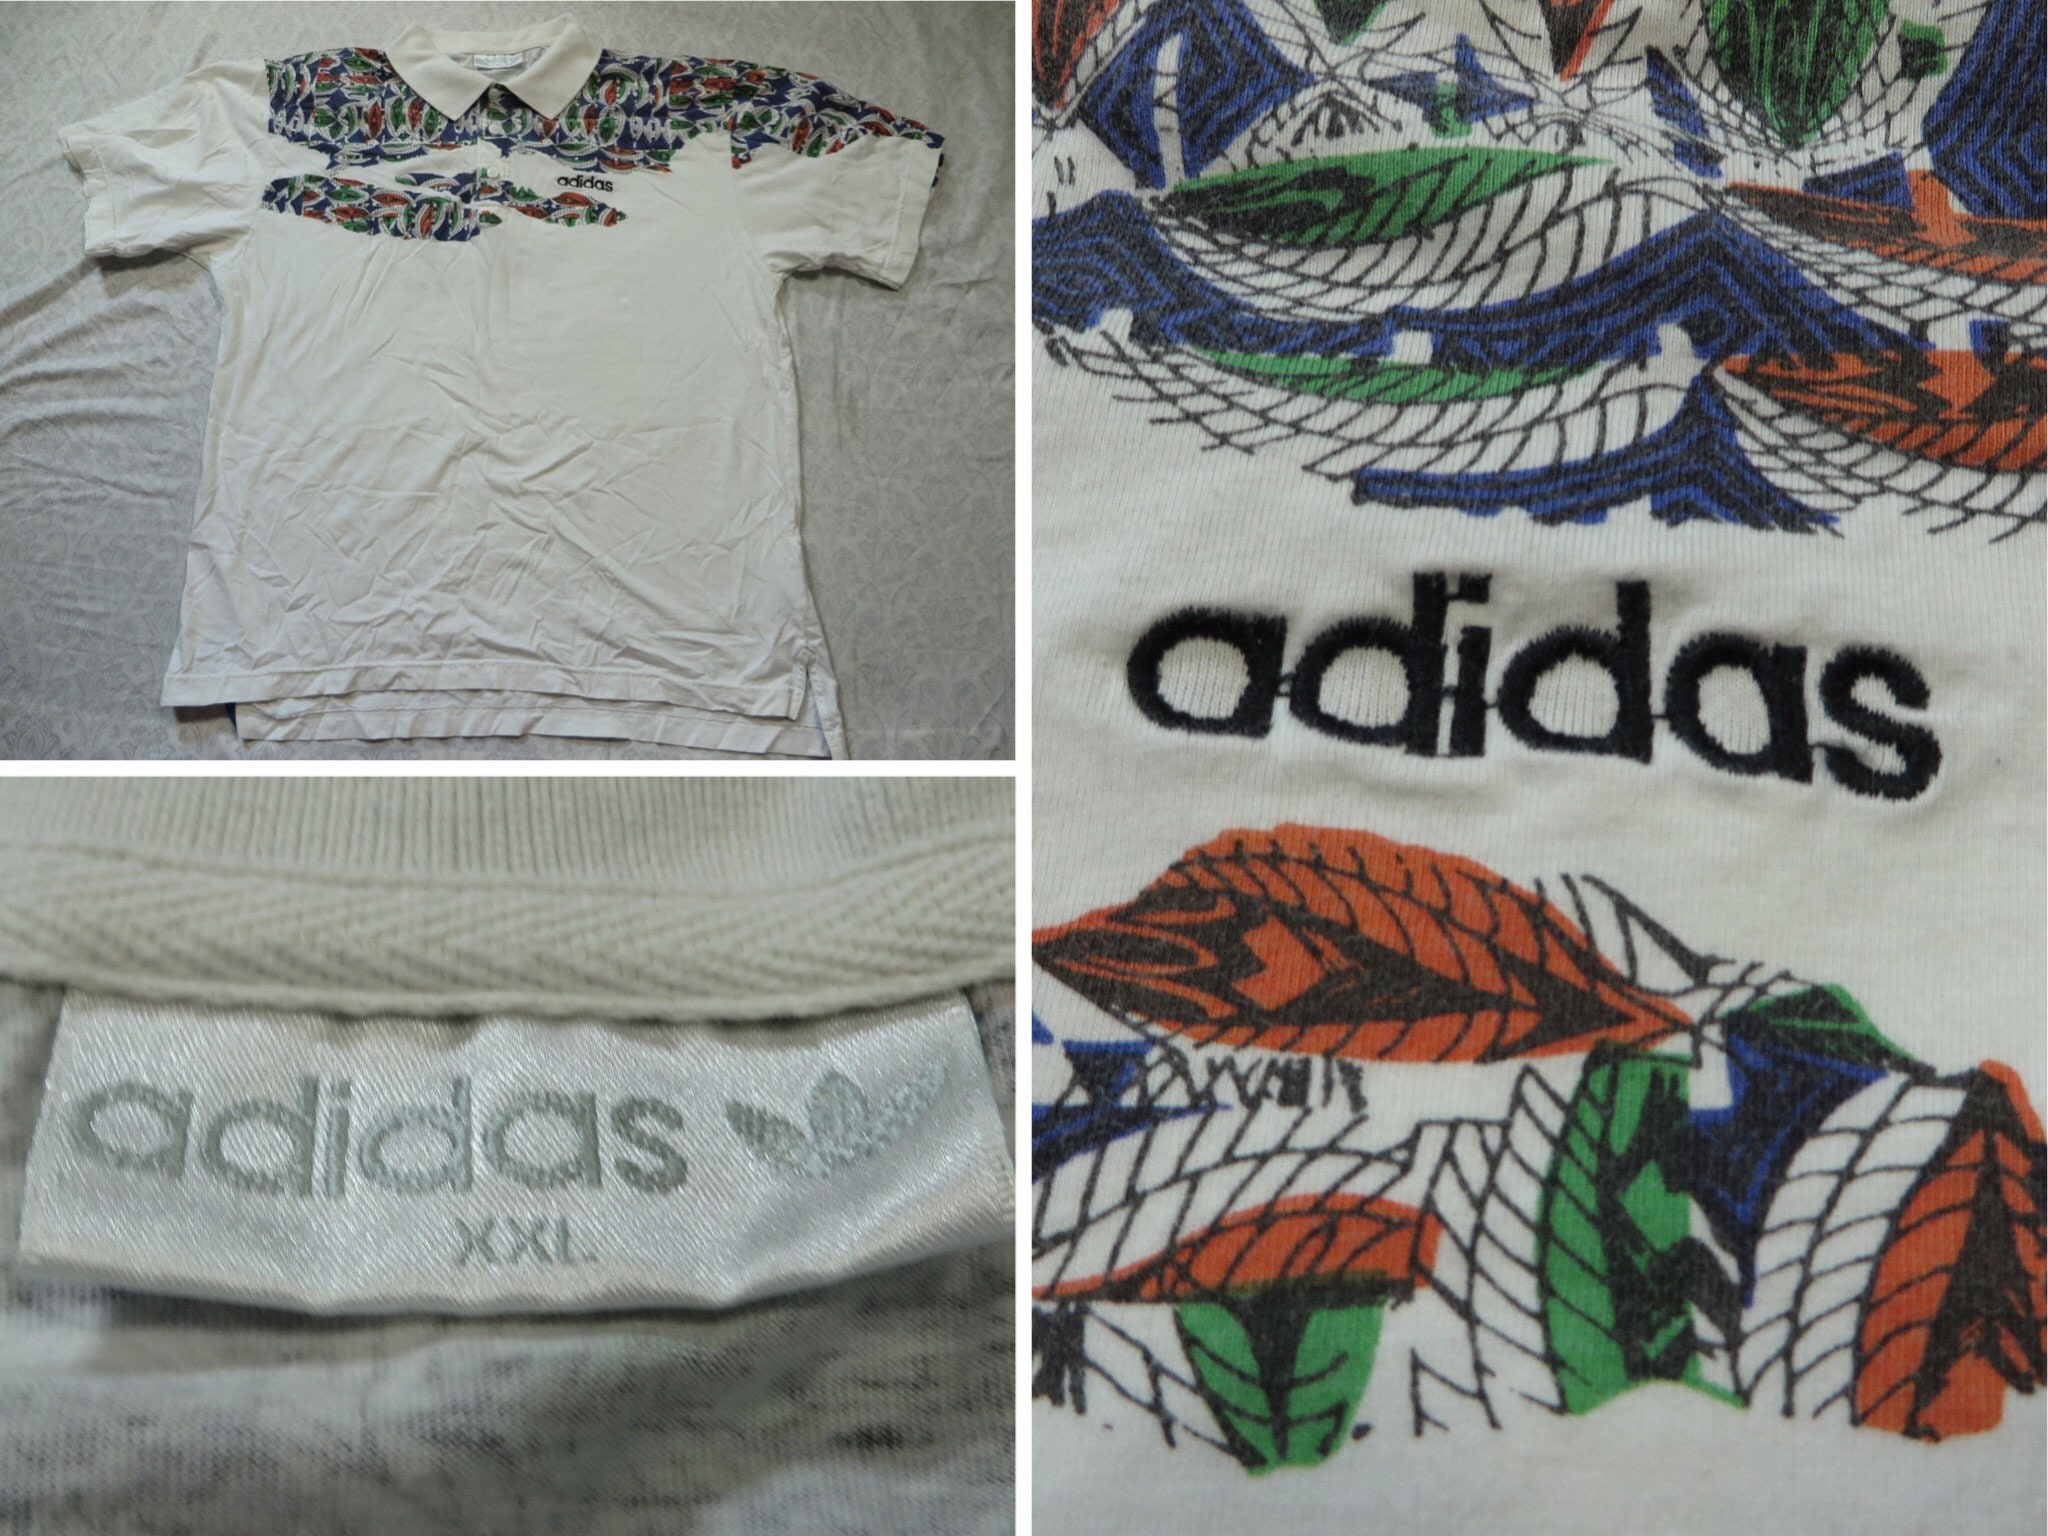 Adidas Men's Shirt - White - XL